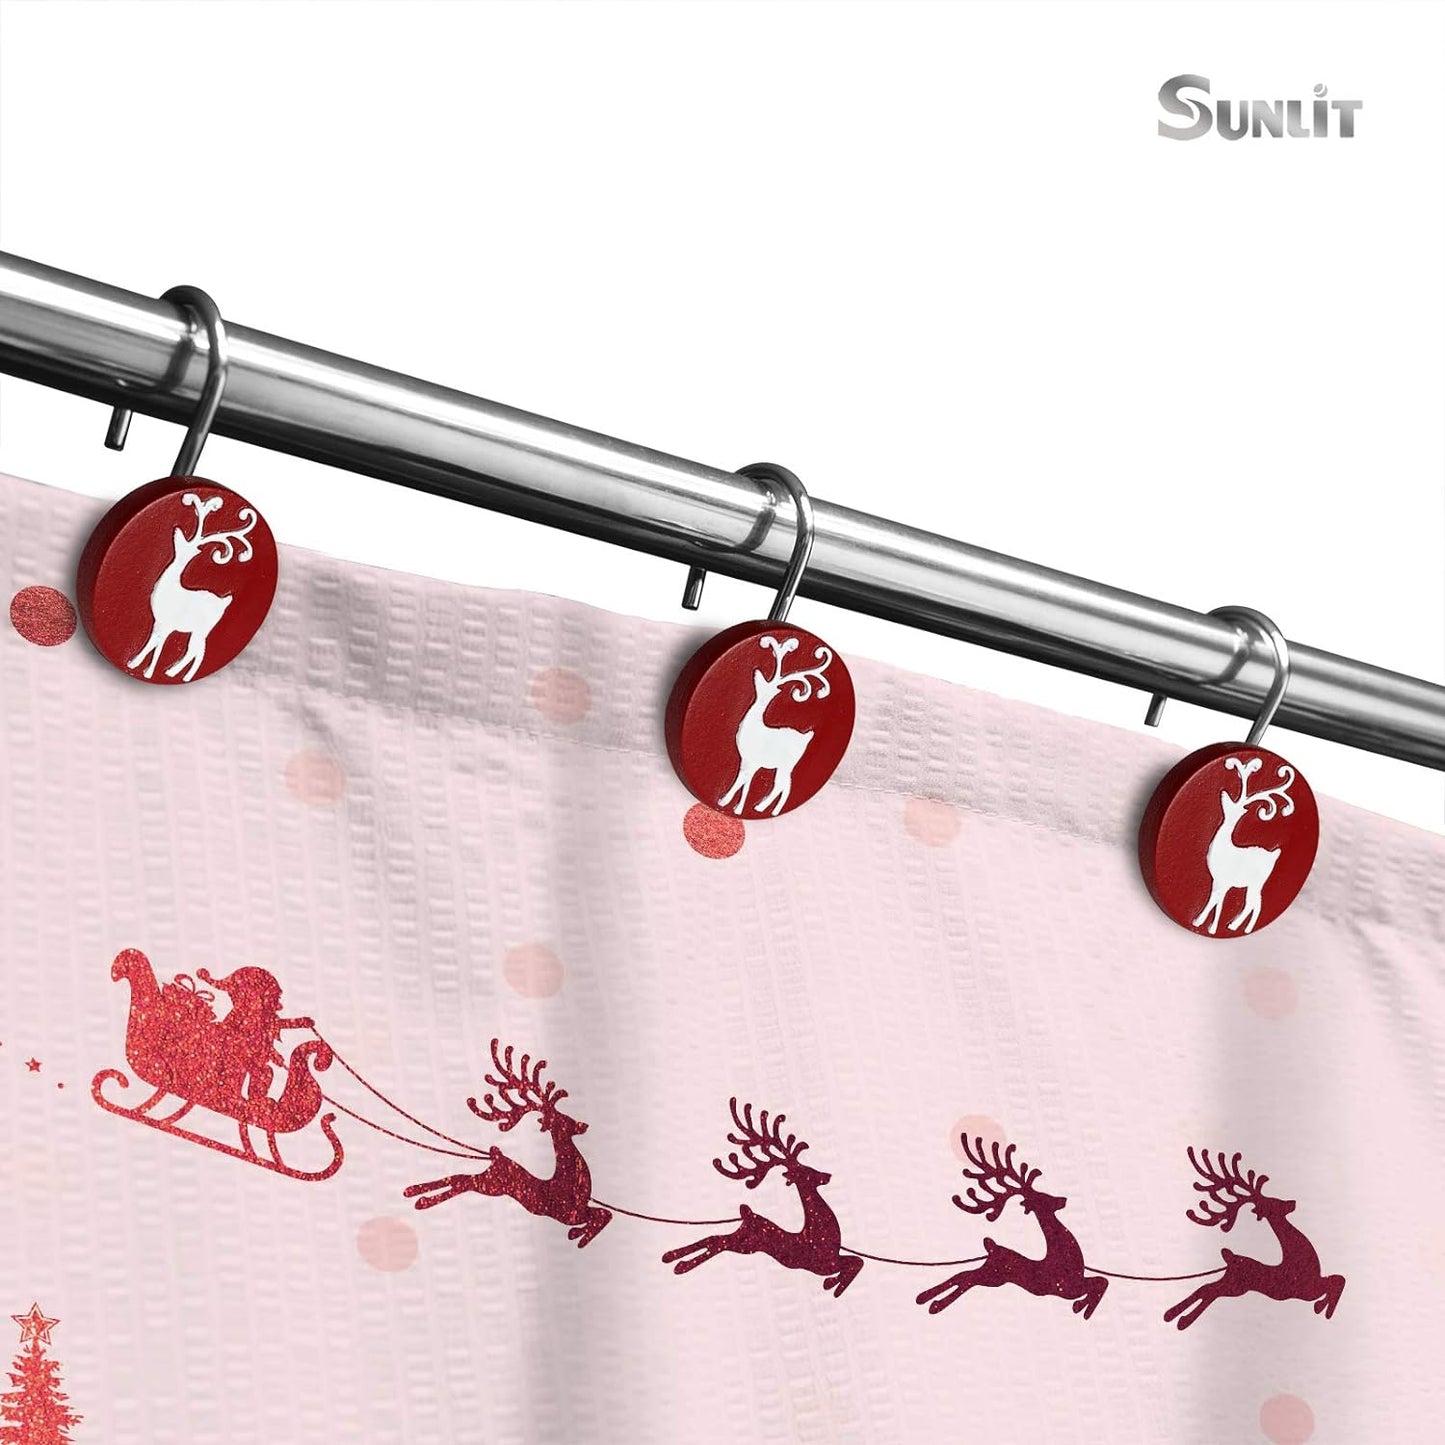 Sunlit Merry Christmas Shower Curtain Hooks White Reindeer Red Shower Curtain Rings, Resin, Winter Bathroom Decoration - 12 Pack